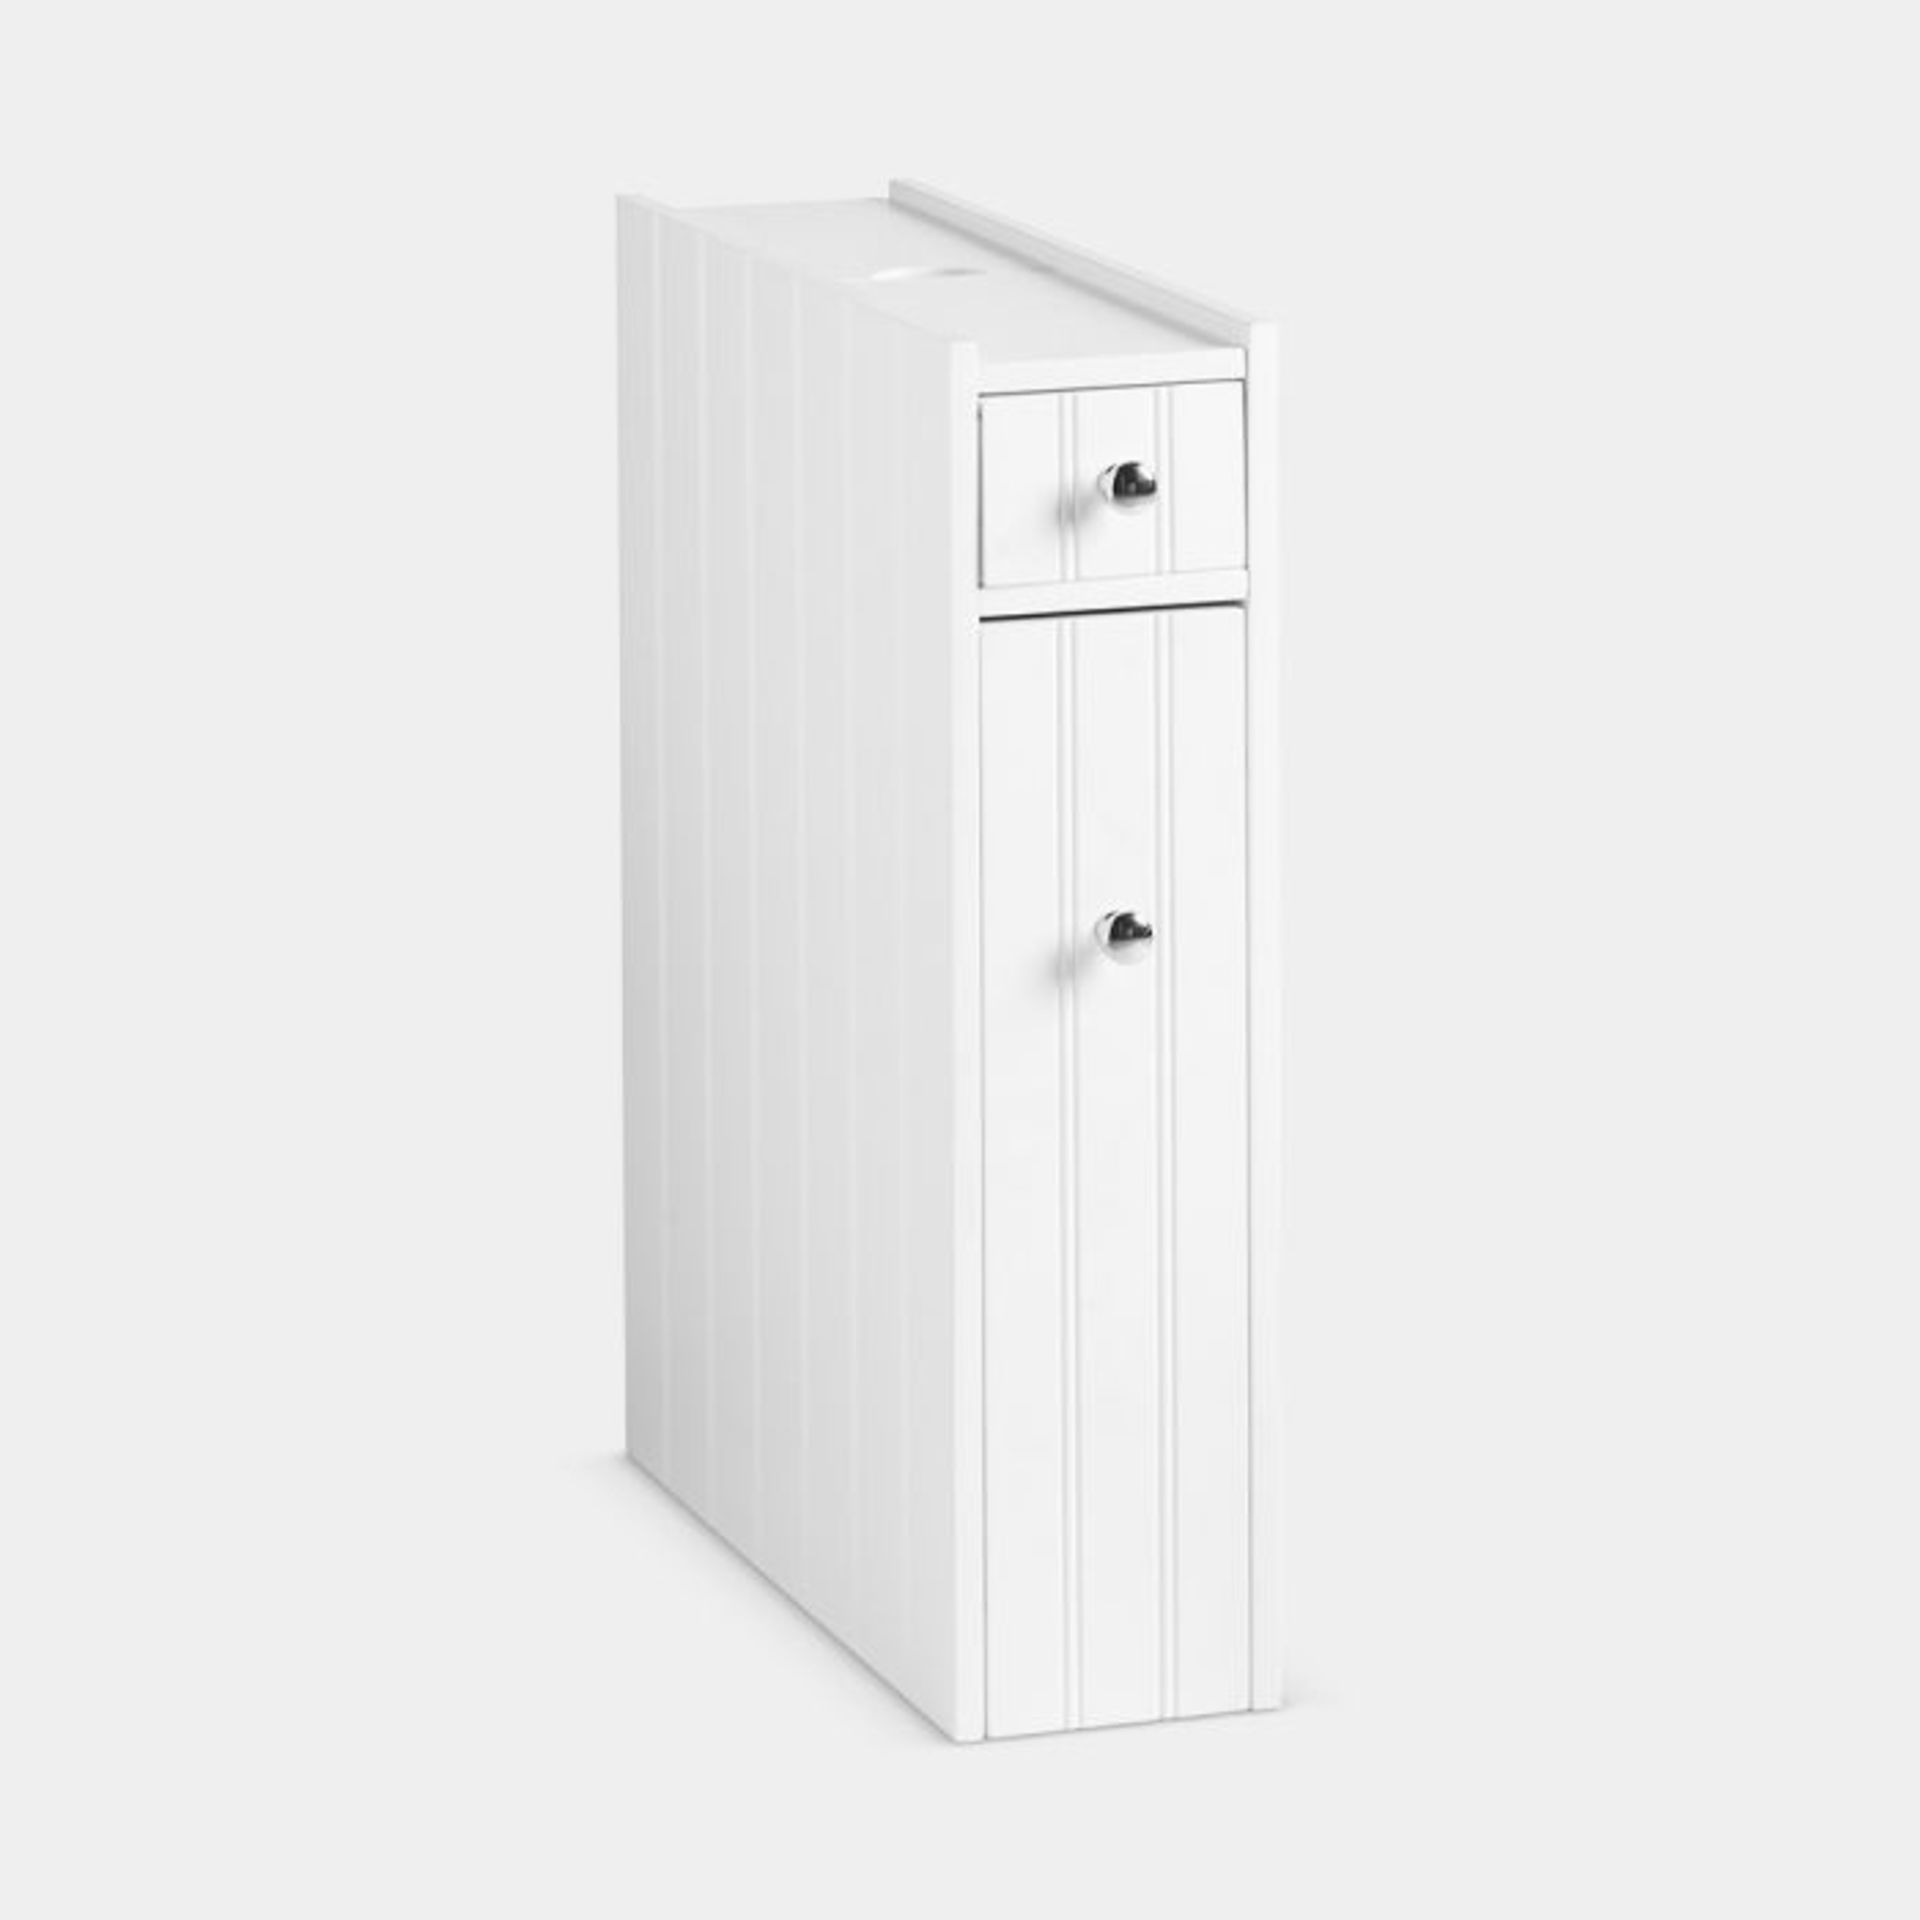 Holbrook White Slim Bathroom Storage Unit. -ER35. If you’d like more storage in your bathroom but